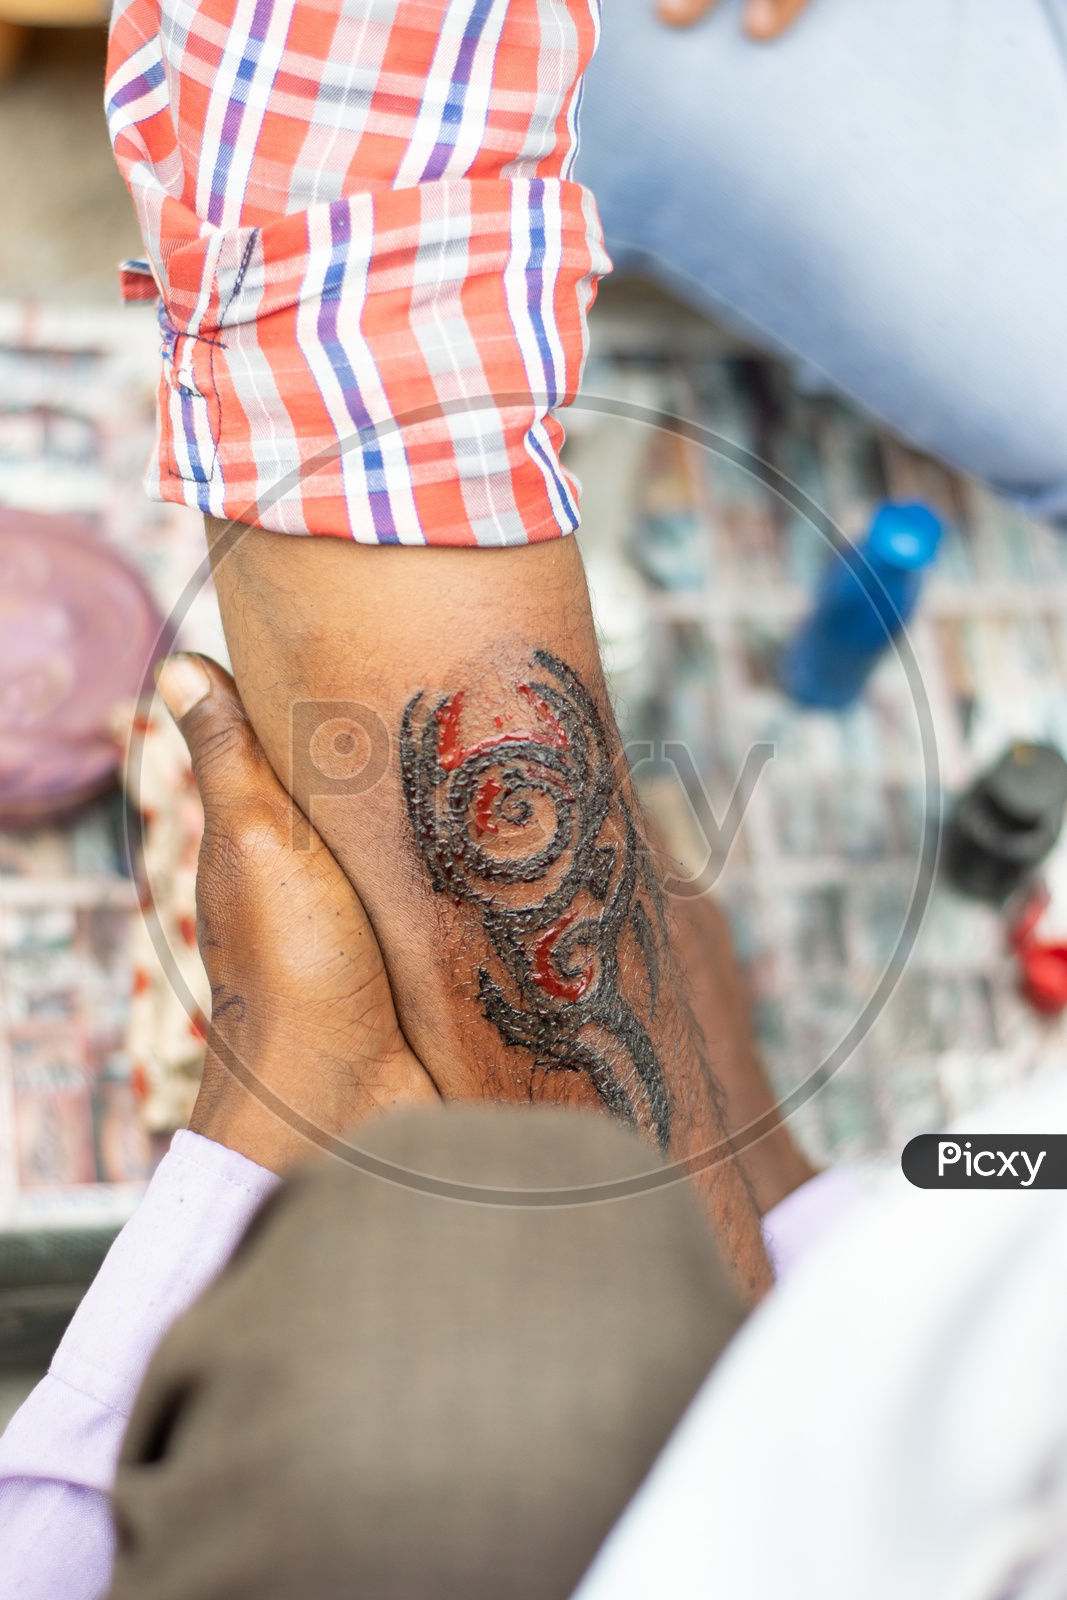 Roadside Artist doing Tattoos on a Man